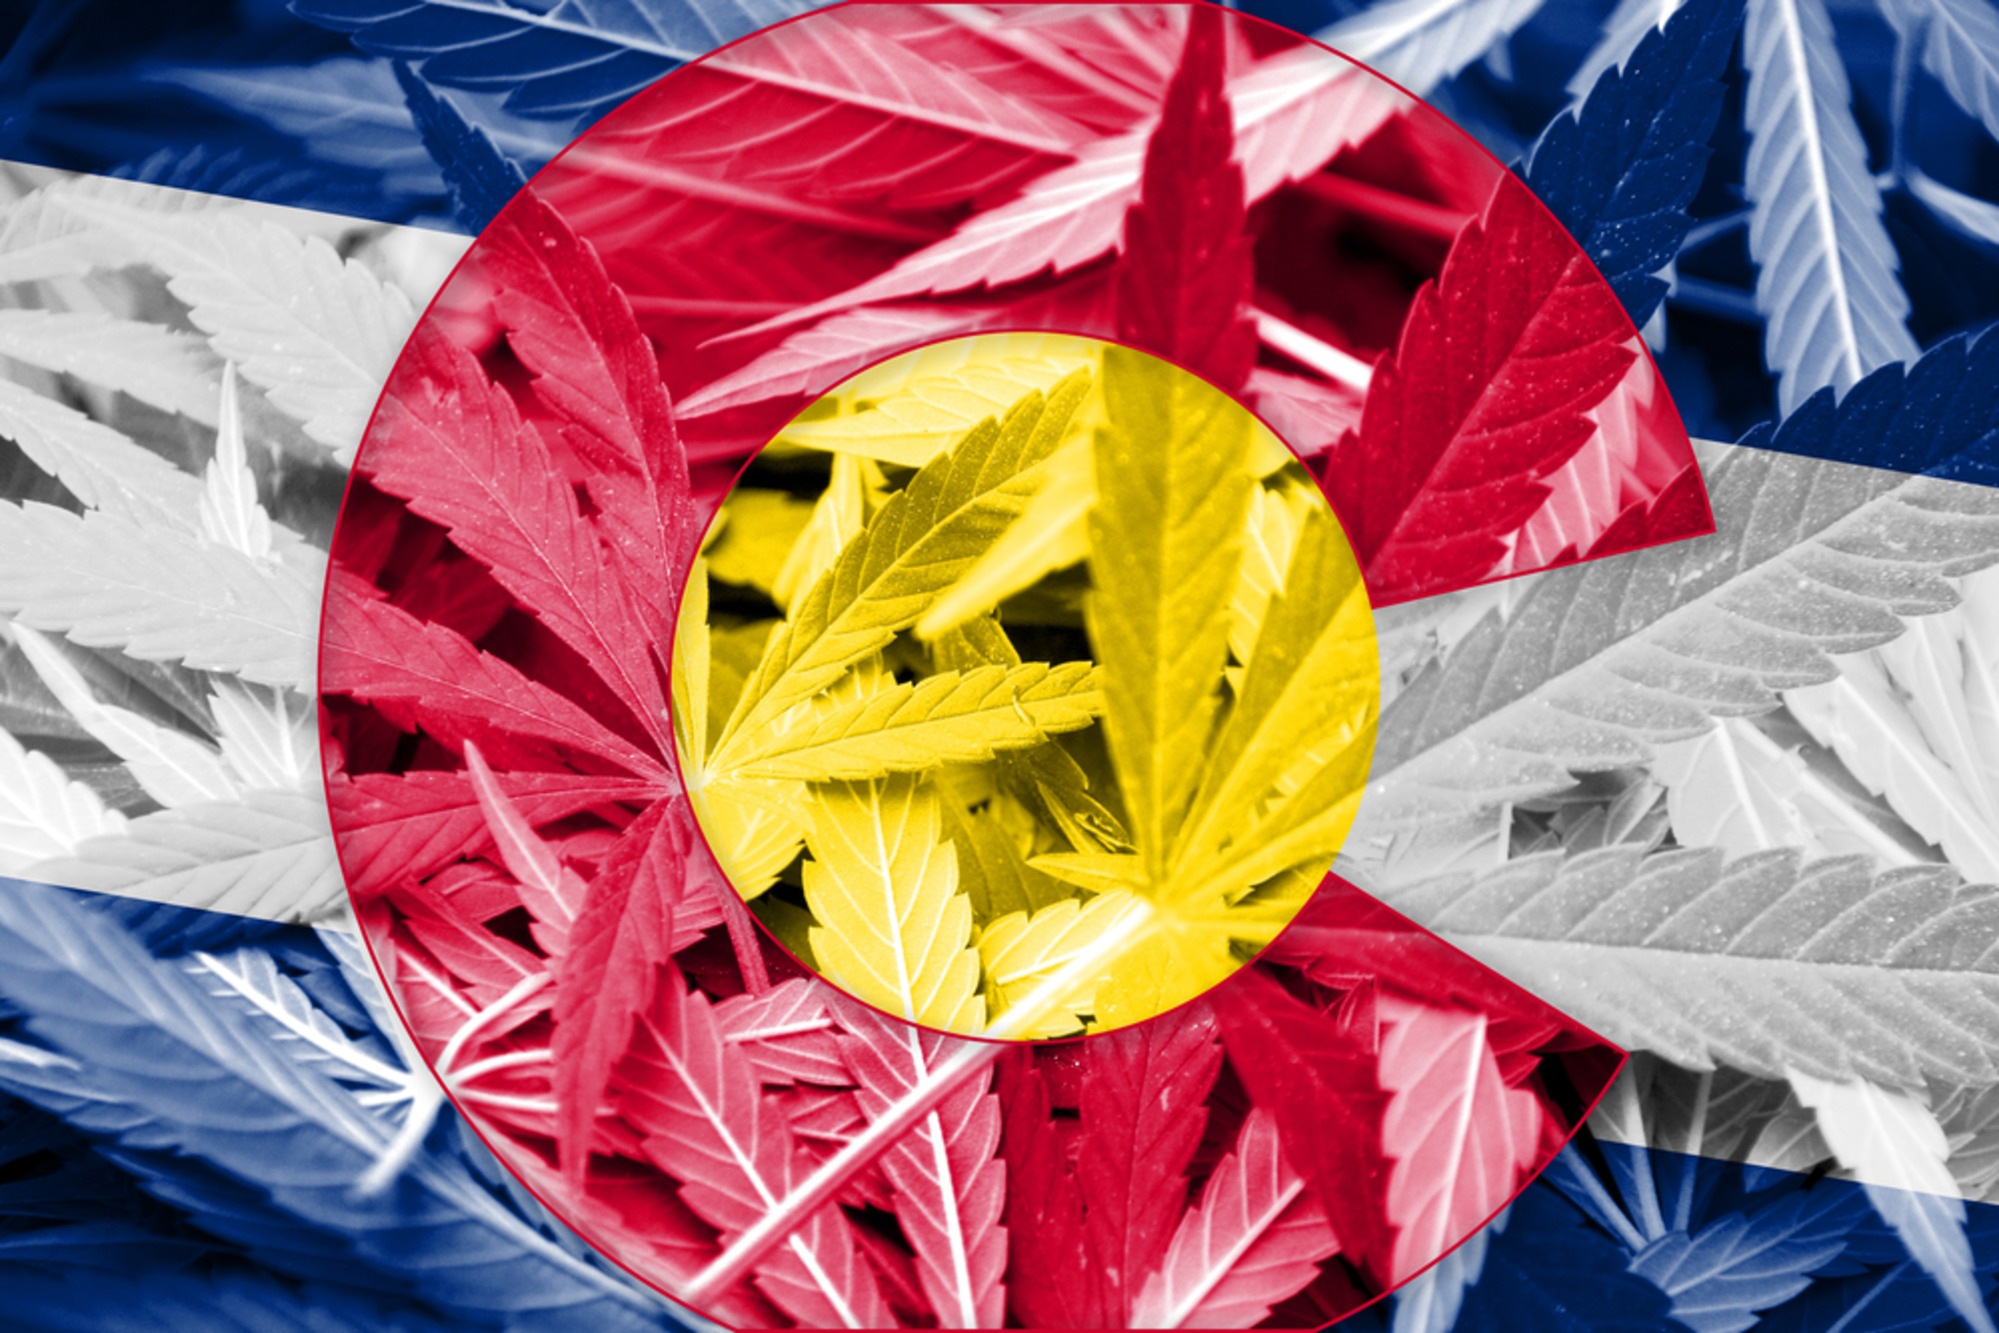 Legalization of marijuana in Colorado